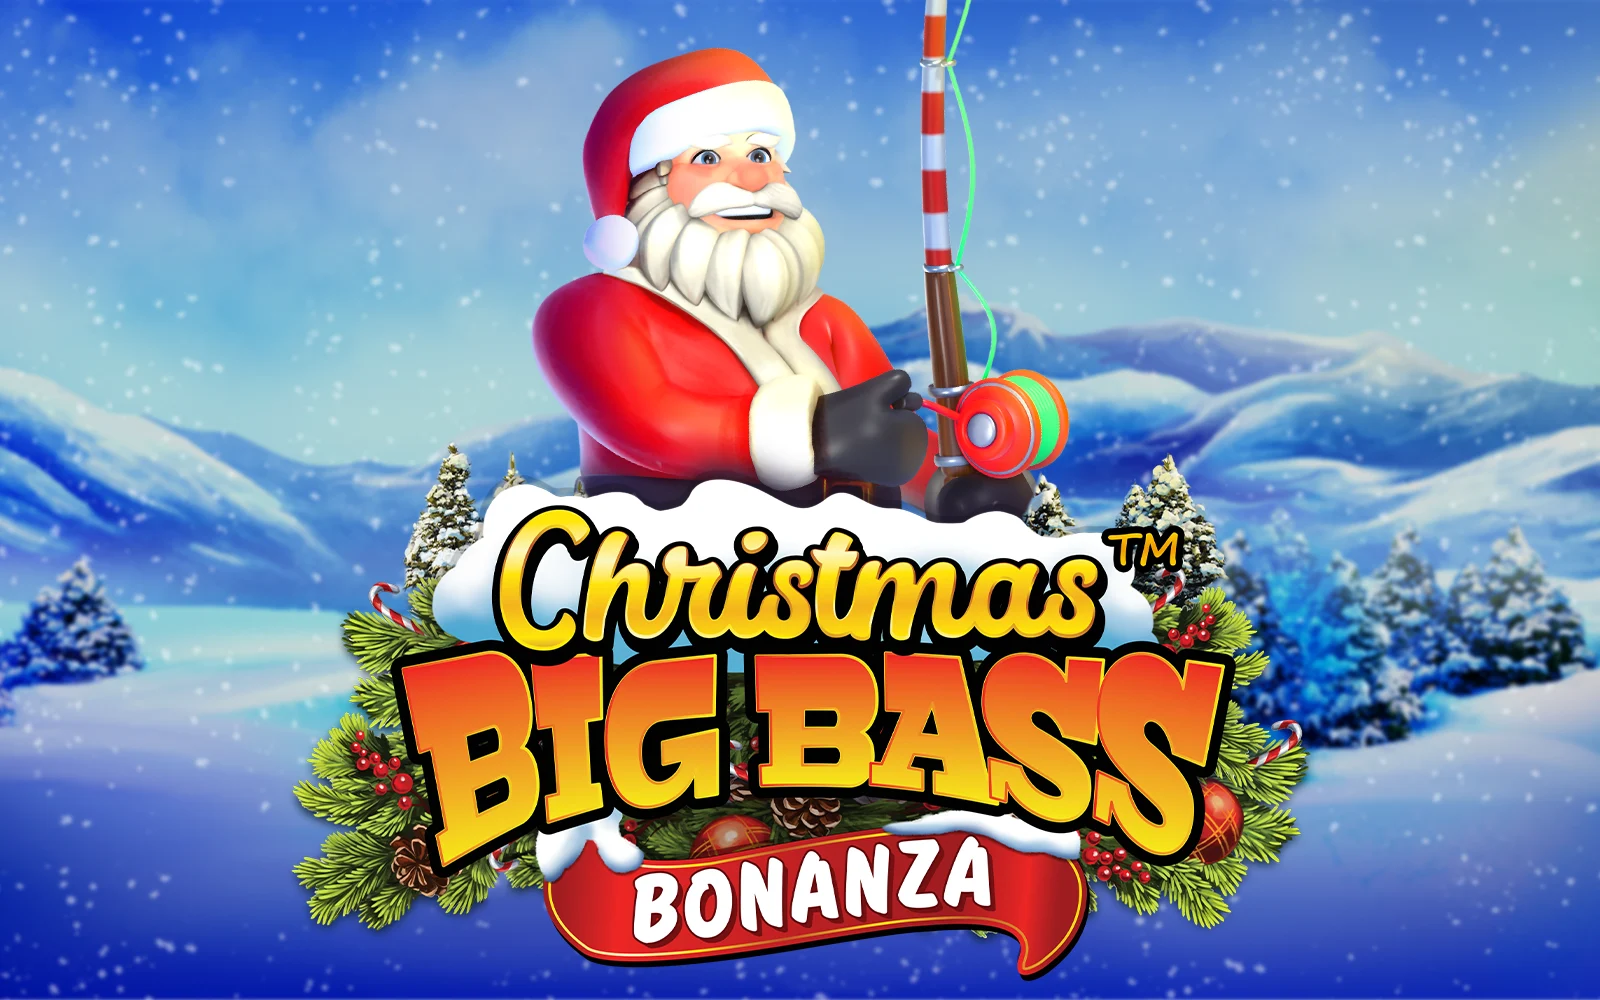 Play Christmas Big Bass Bonanza™ on Starcasino.be online casino